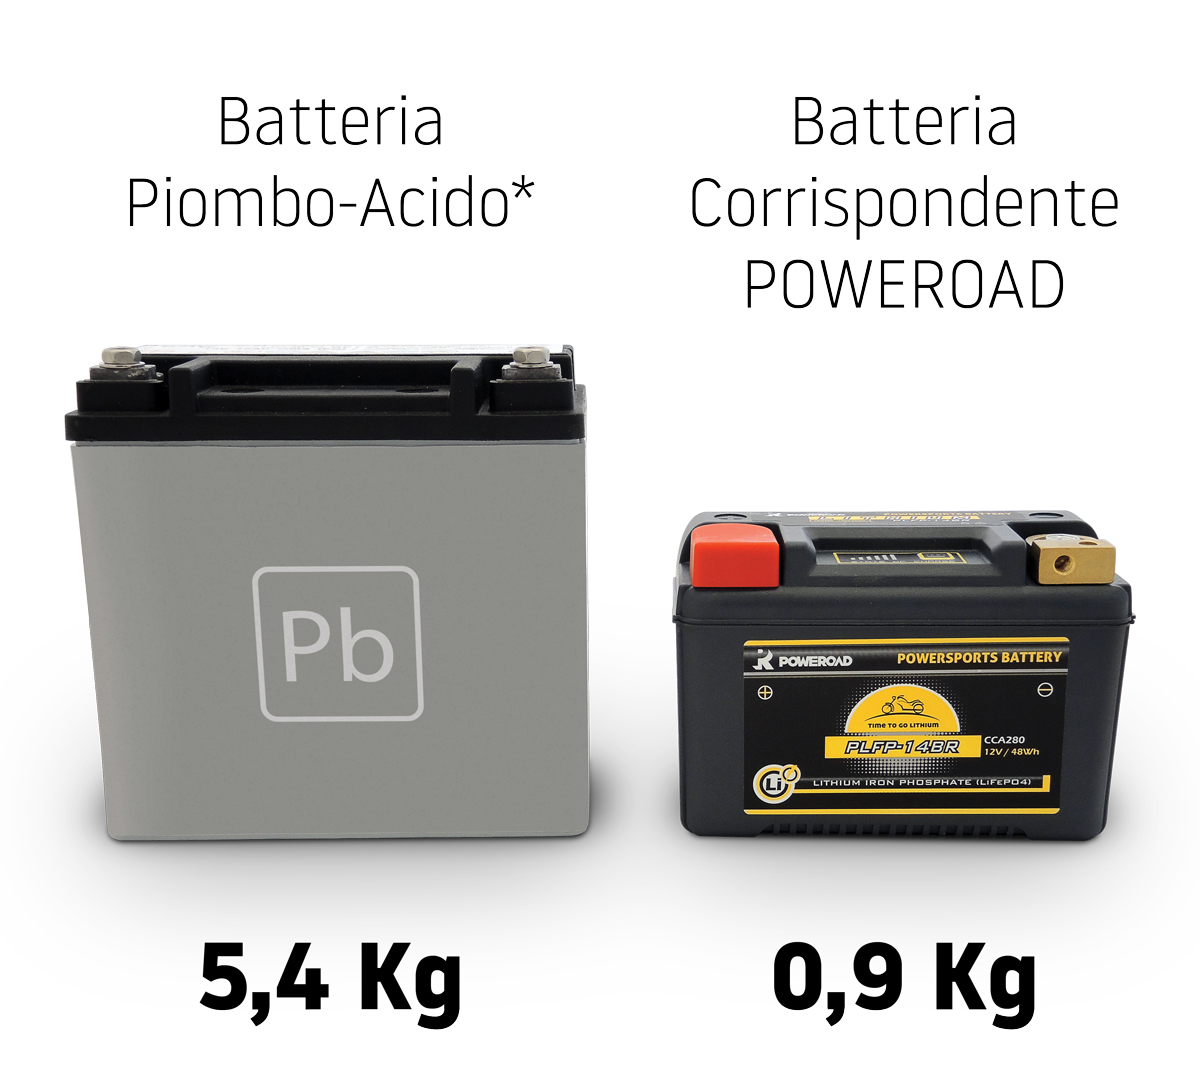 Batteria Piombo-Acido* 4,5 Kg, corrispondente POWEROAD 0,9 Kg